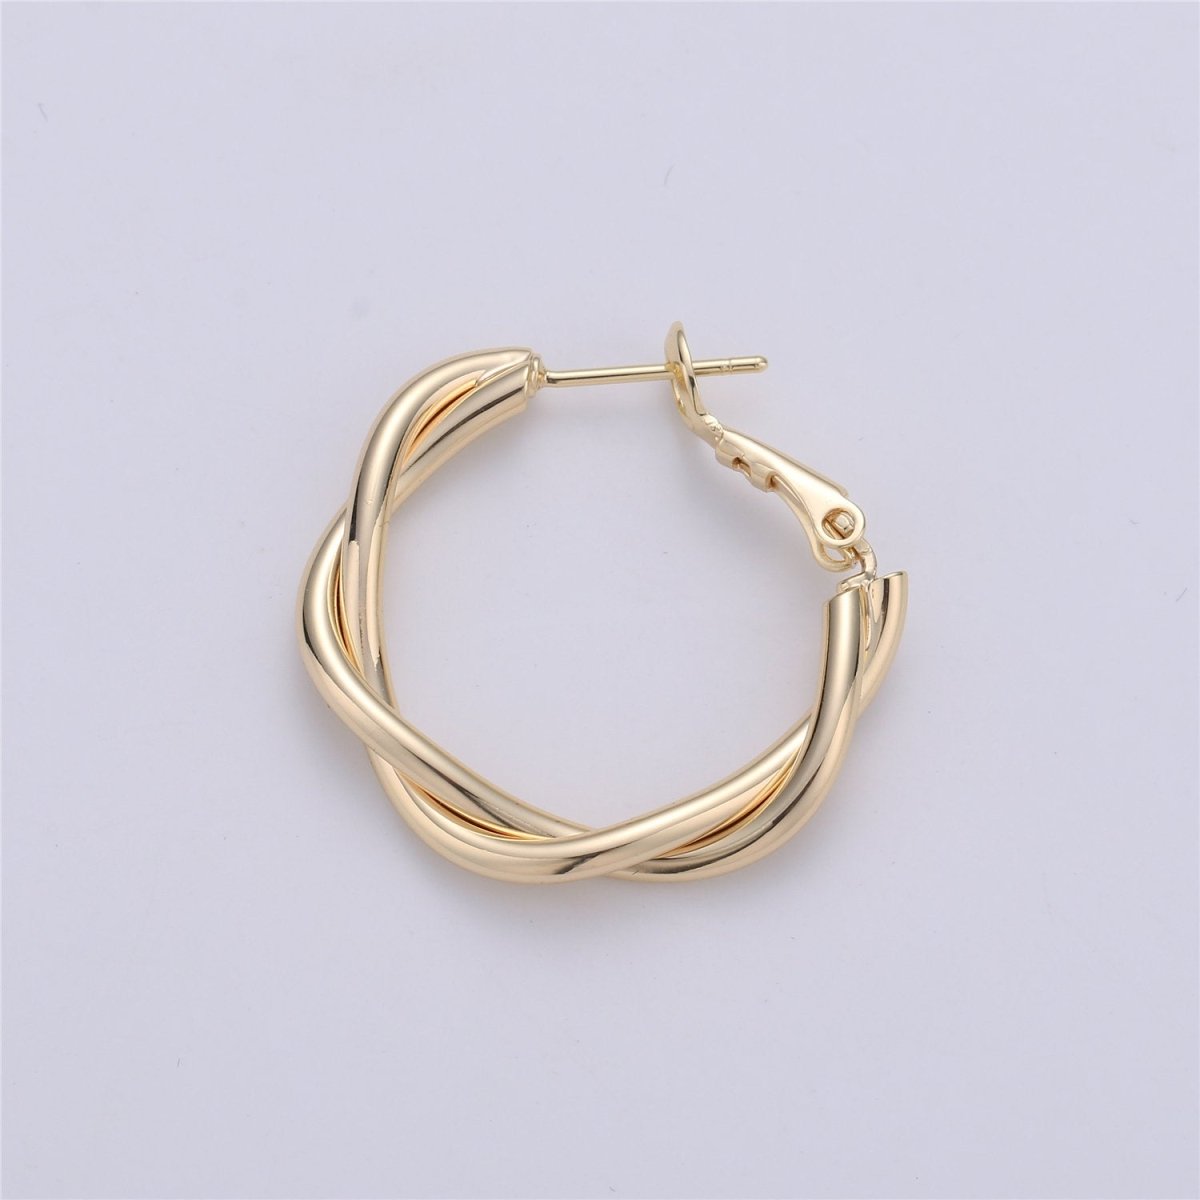 Dainty Gold Hoop Earring- Twisted Hoop Earring - Thin Earring - Gold Filled Hoop Ring - Minimalist Jewelry - 27mm Hoop Unique Earring Supply K-213 - DLUXCA